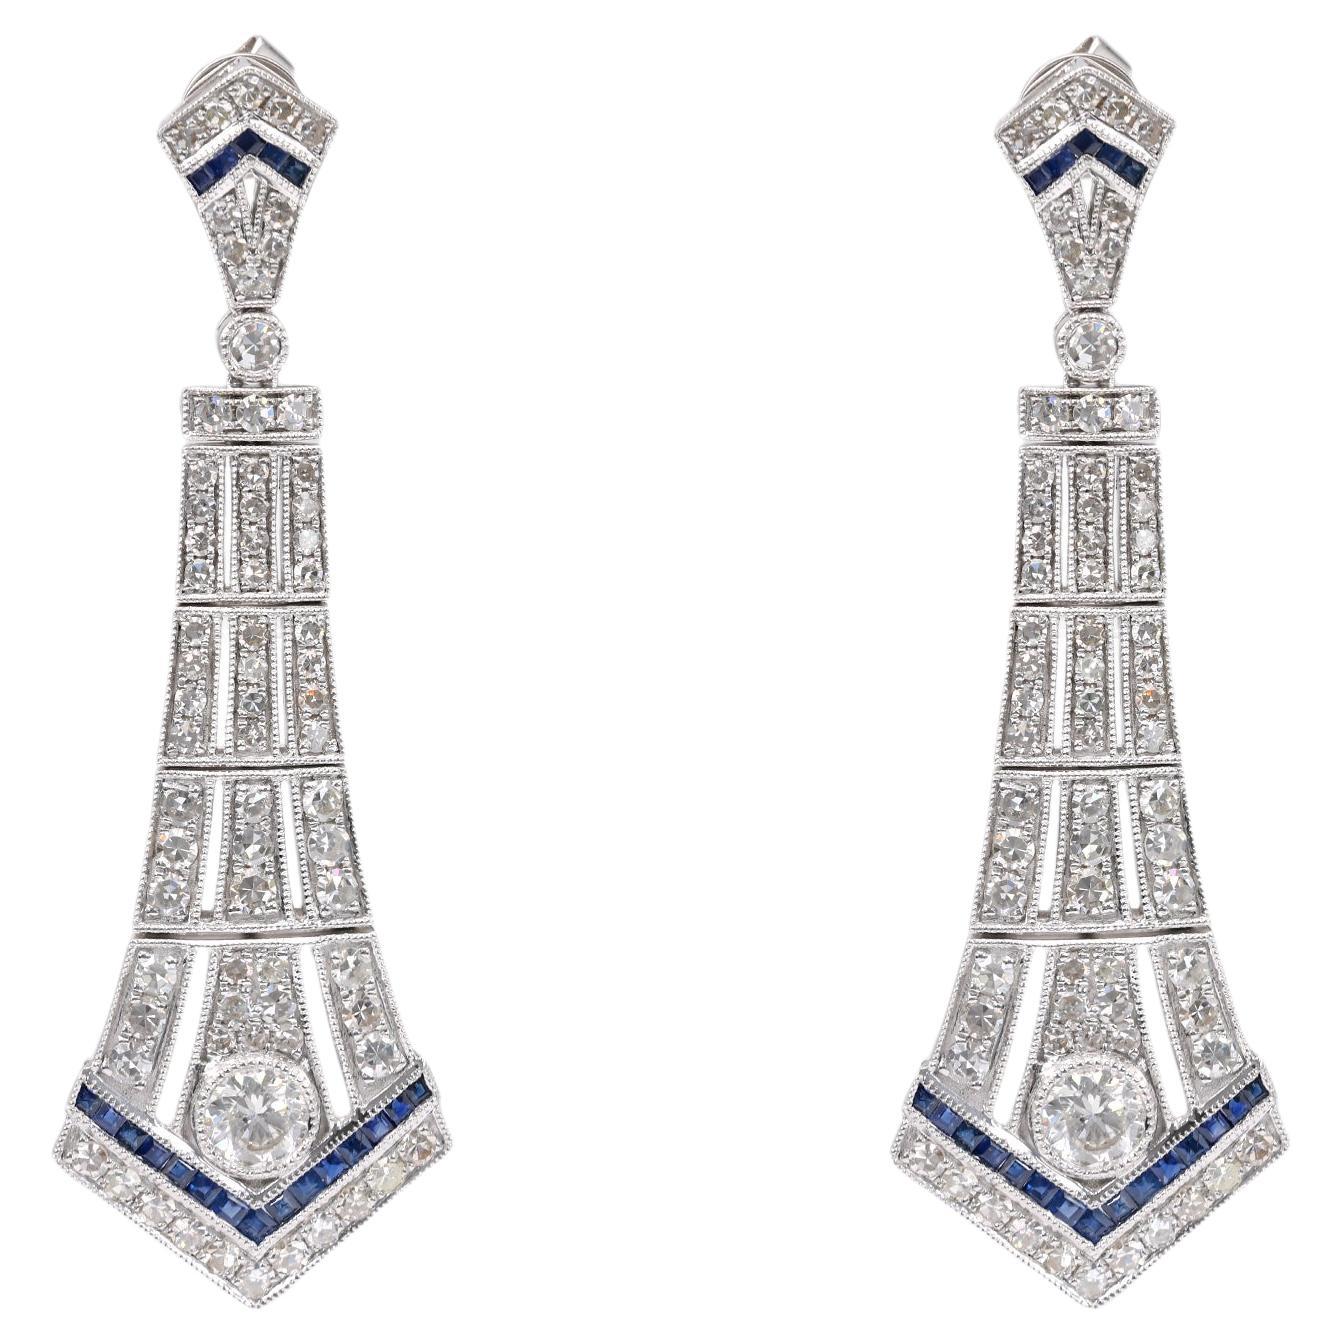 Art Deco inspirierte Diamant-Saphir-Platin-Ohrringe